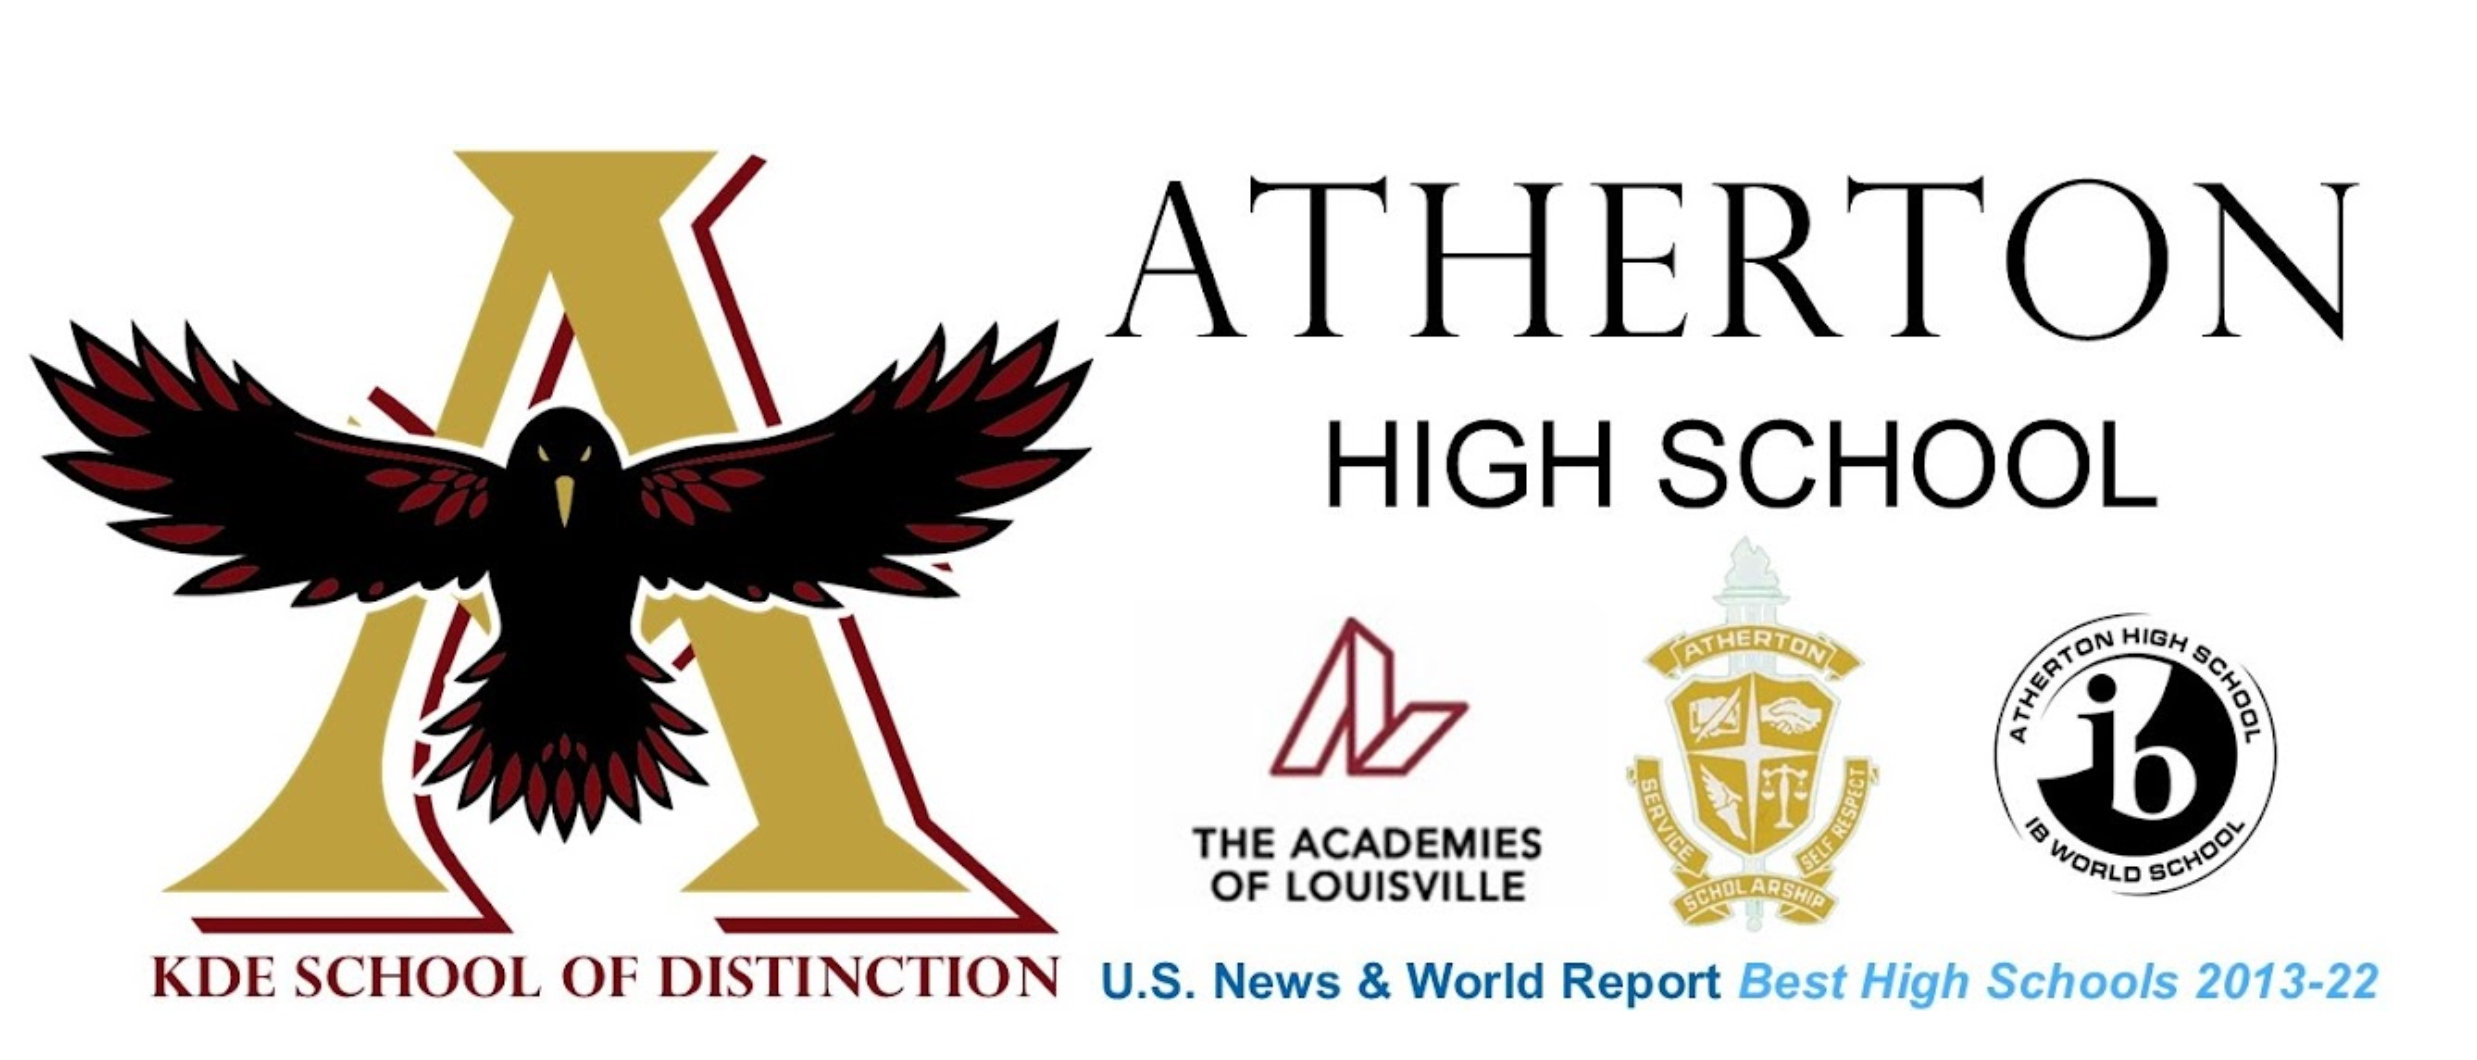 Atherton High School